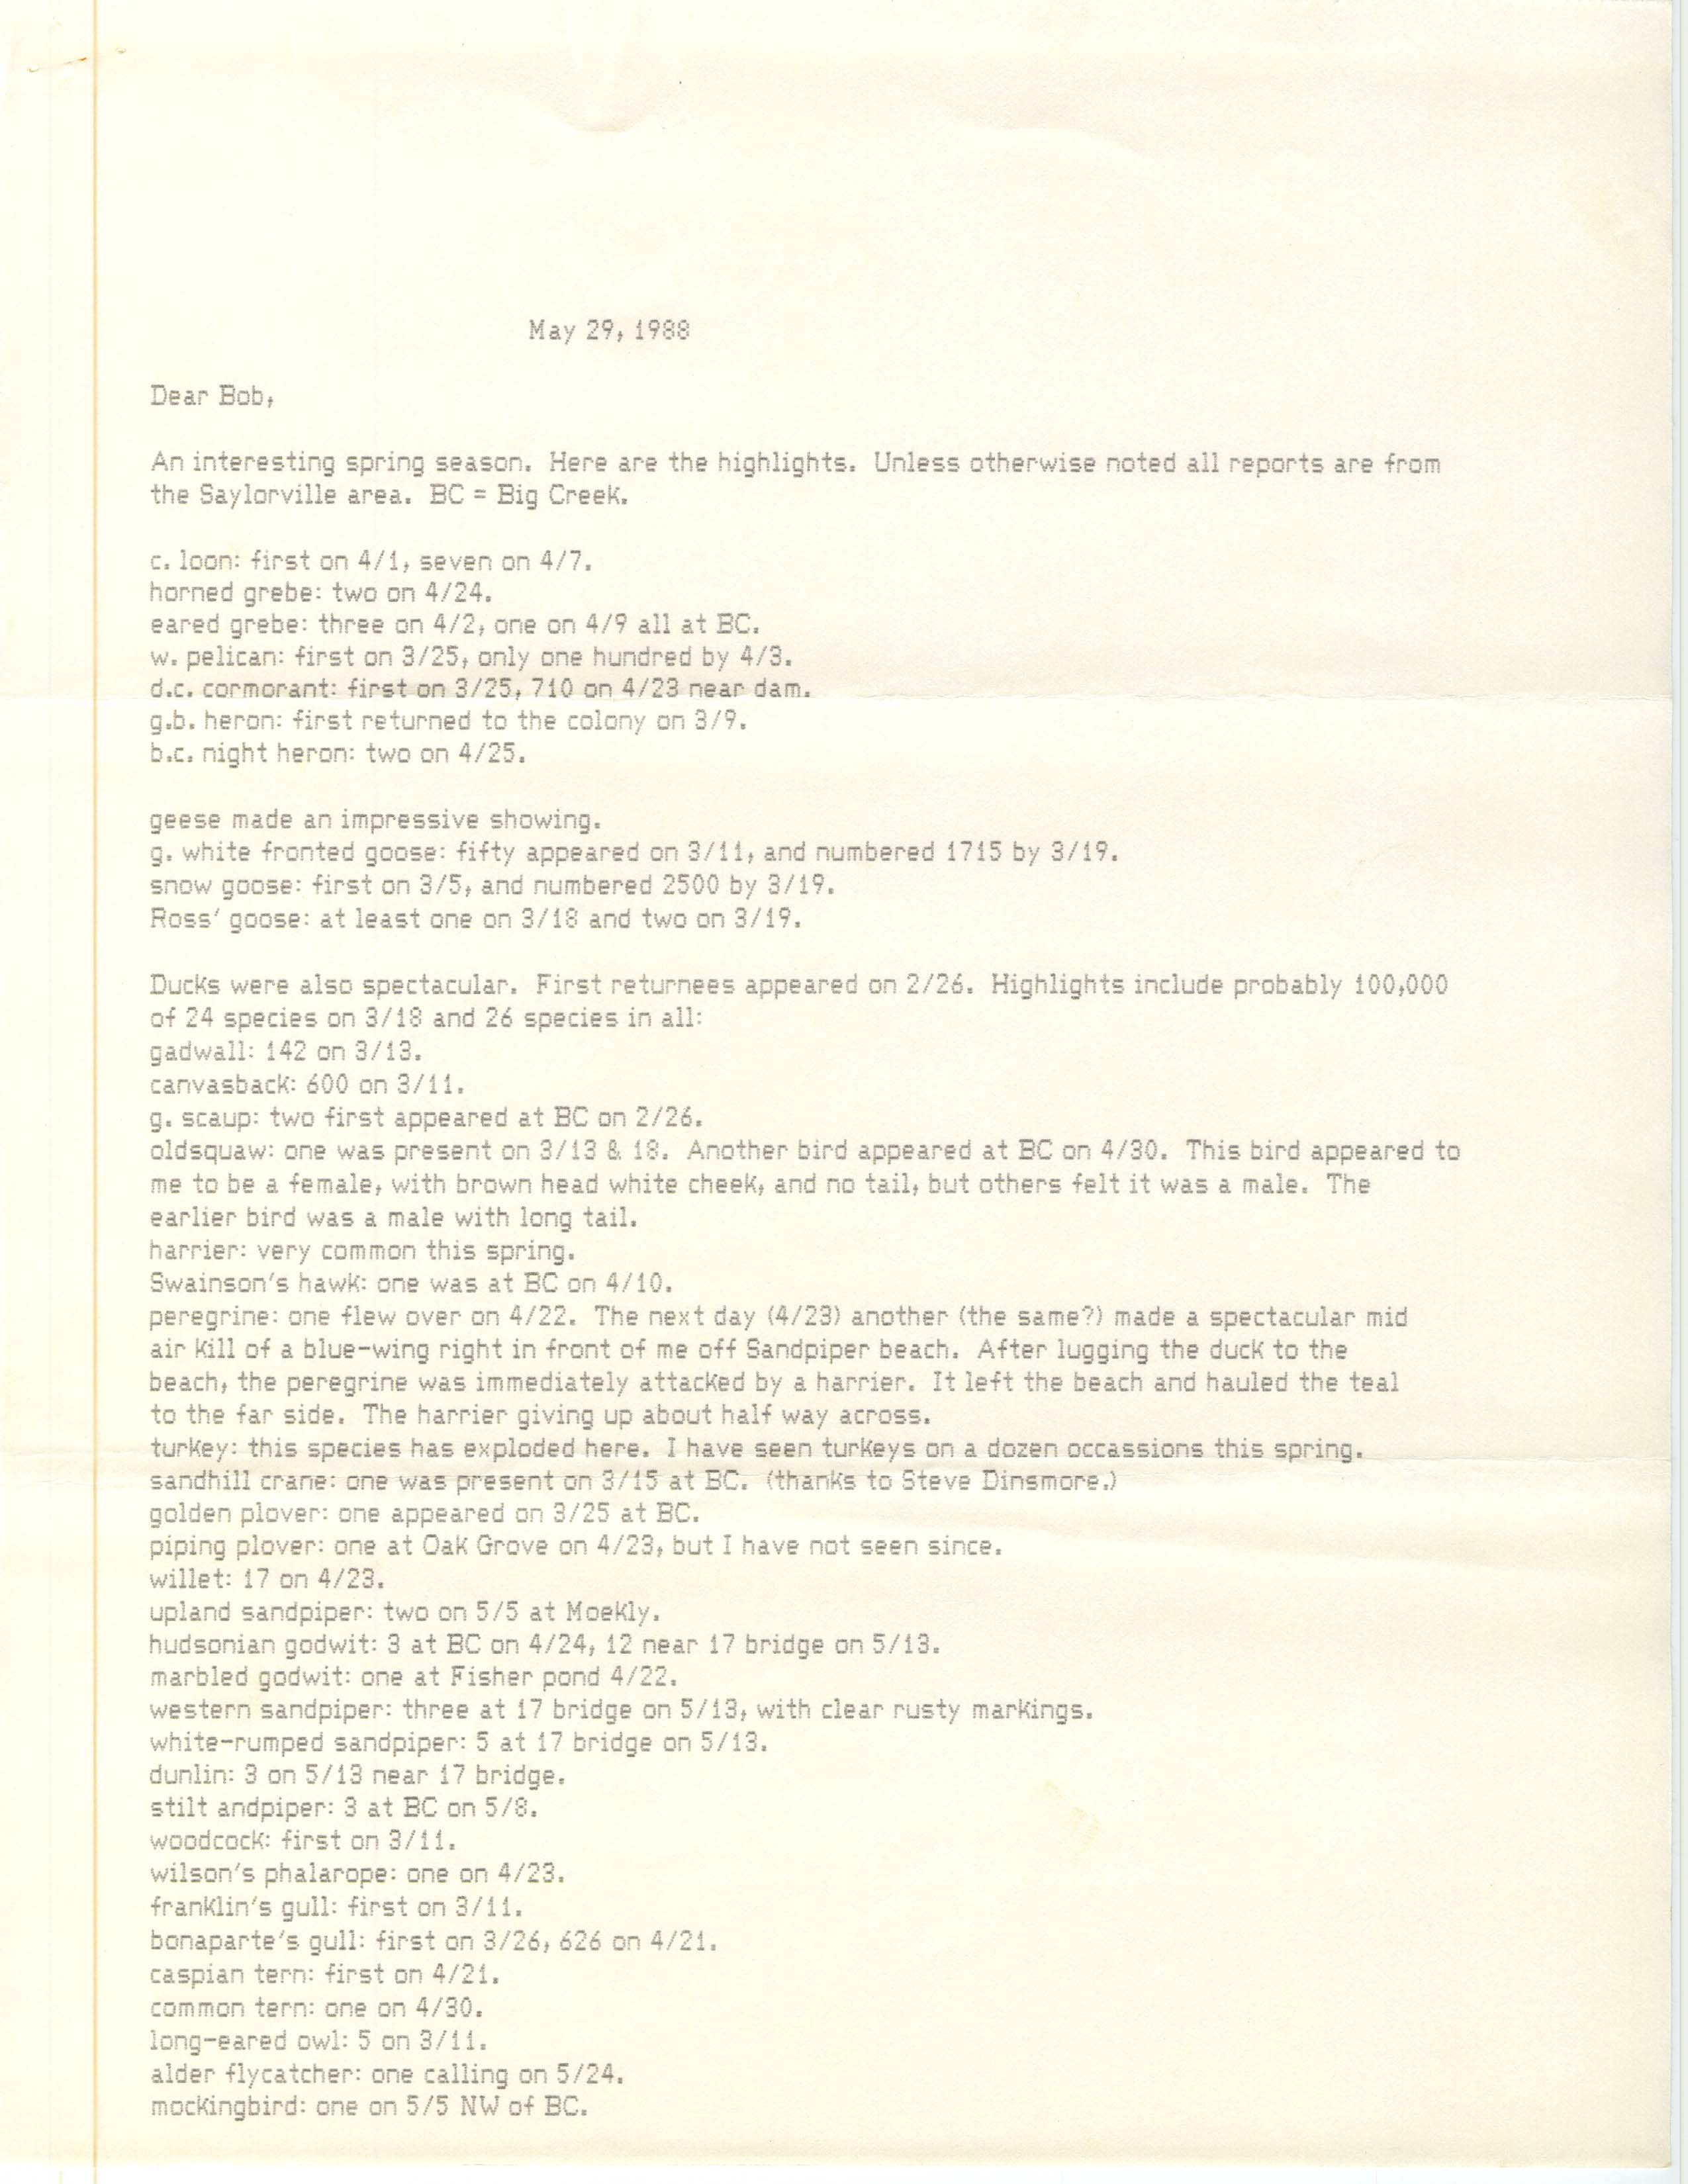 Bery Engebretsen letter to Robert K. Myers regarding bird sightings, May 29, 1988